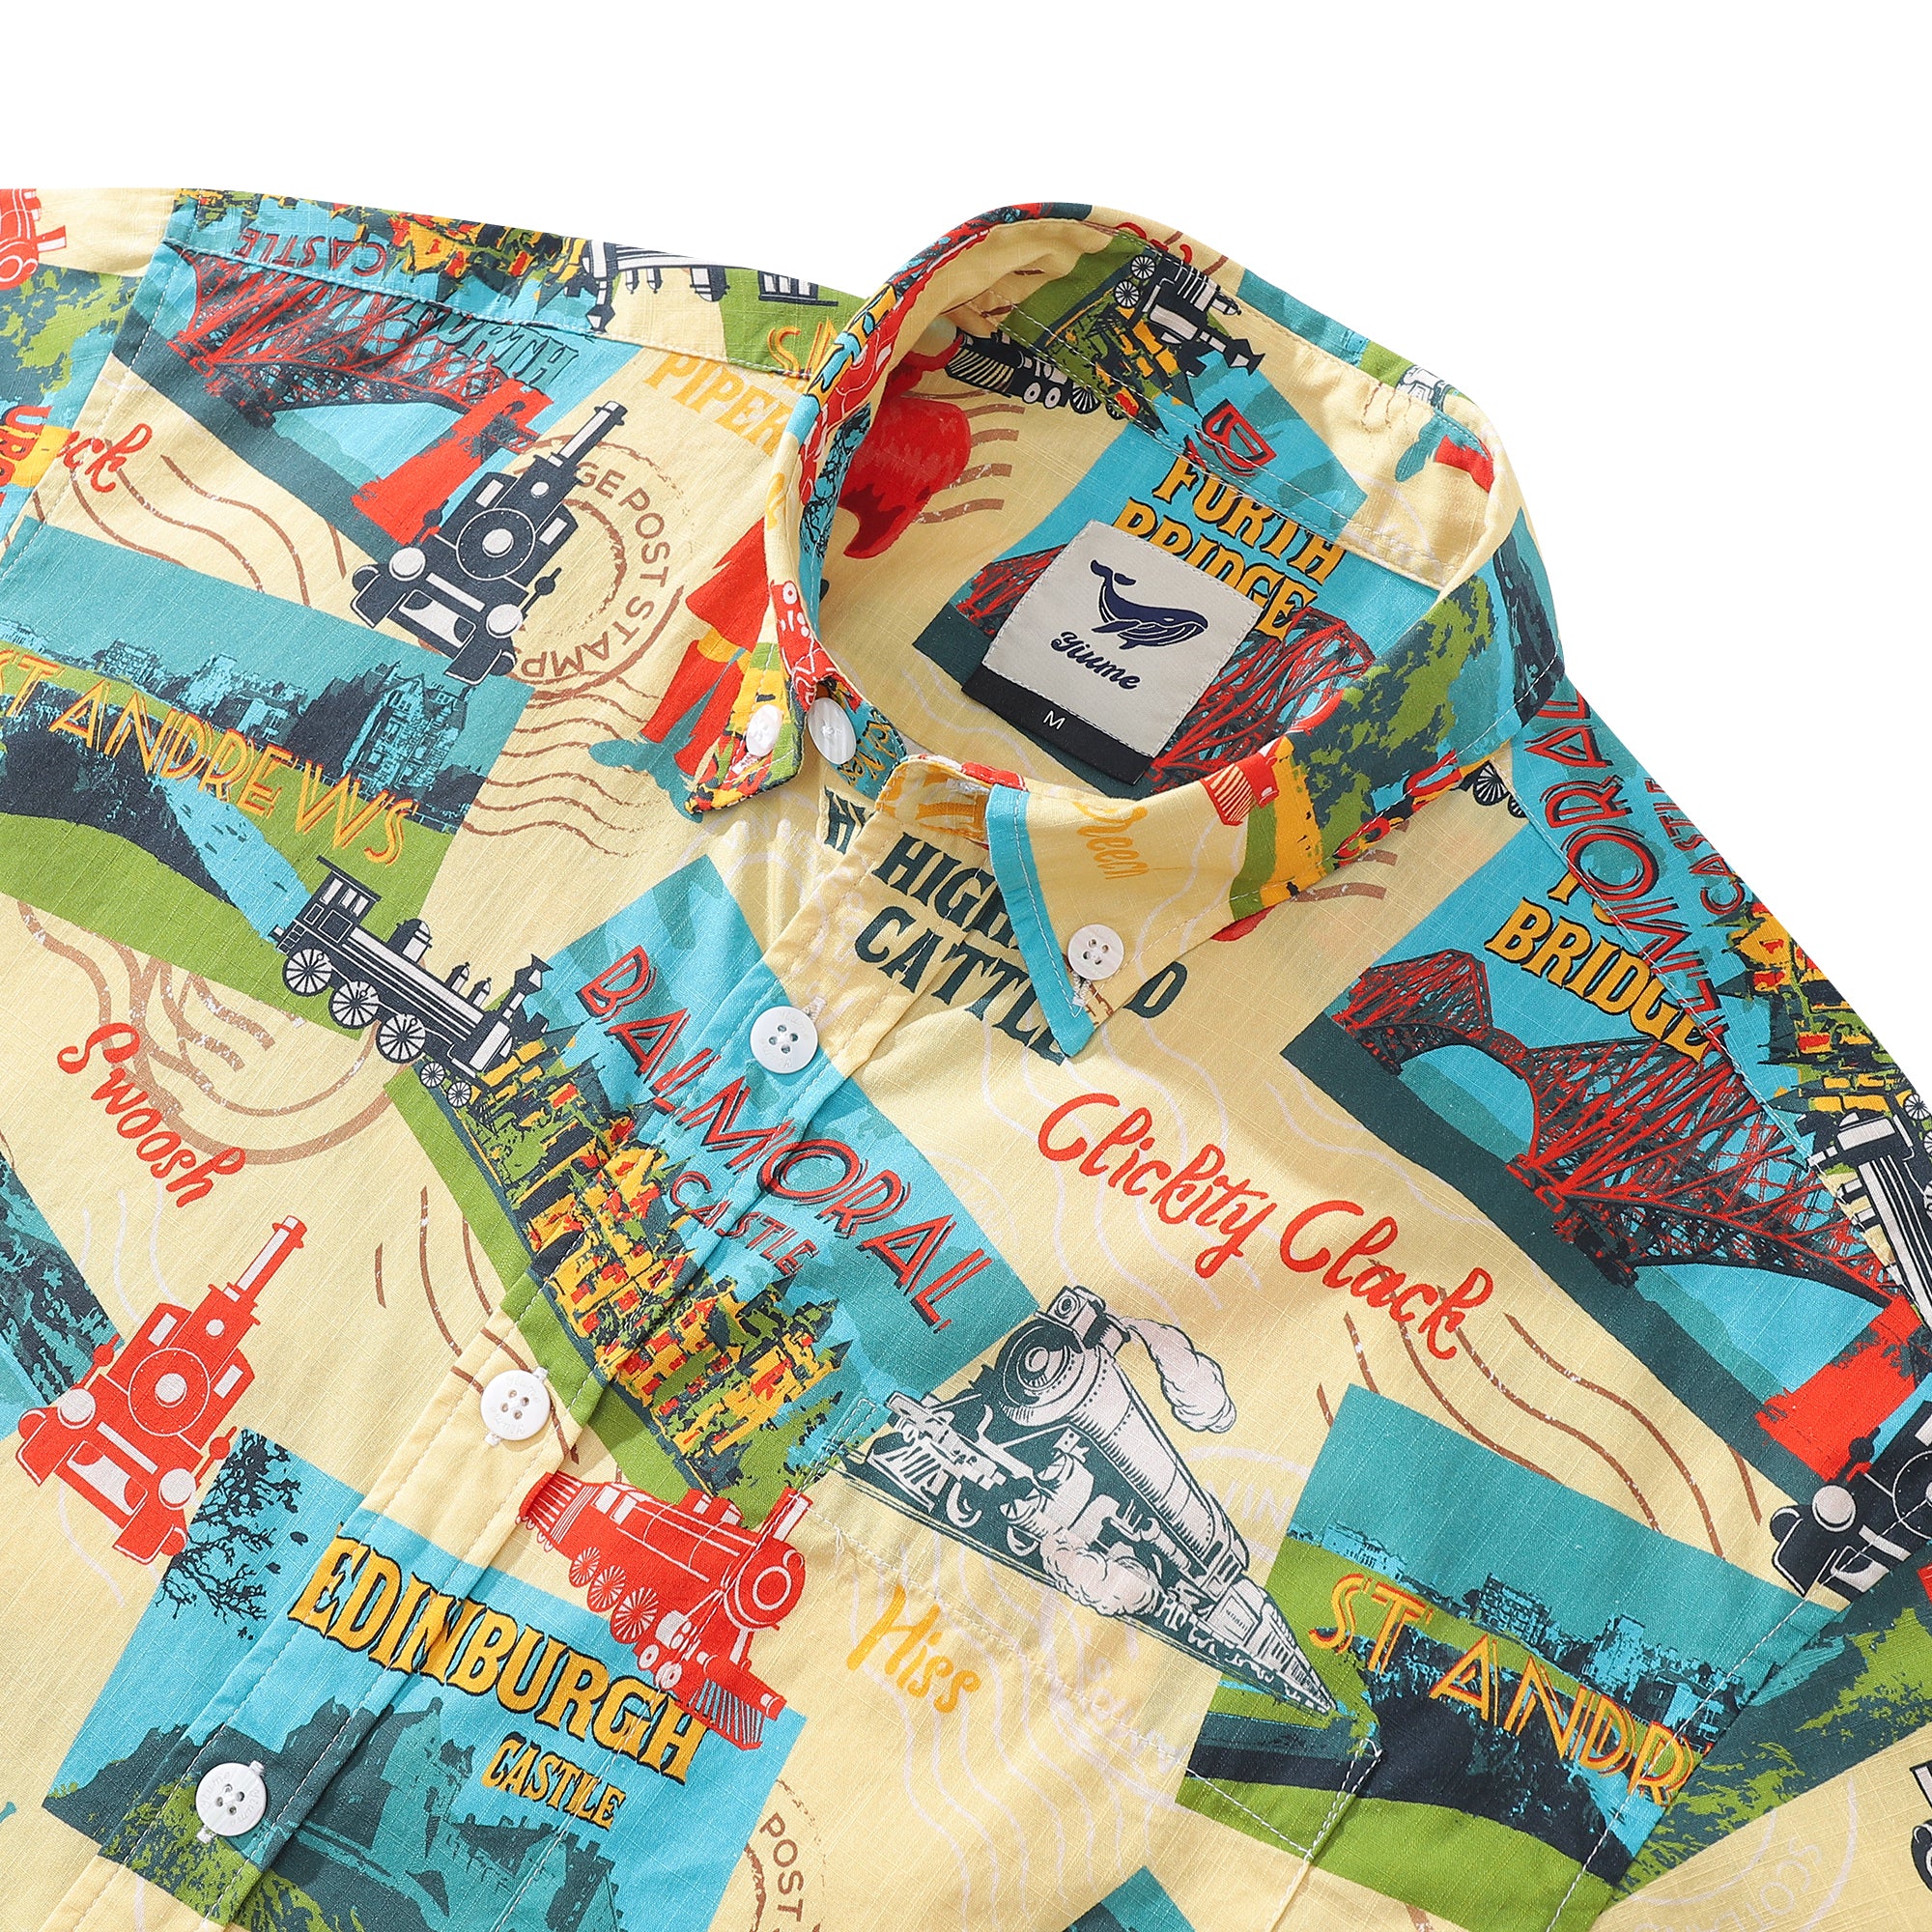 Men's Hawaiian Shirt Heritage Railway Scotland Print 1940s Vintage Short Sleeve Aloha Shirt